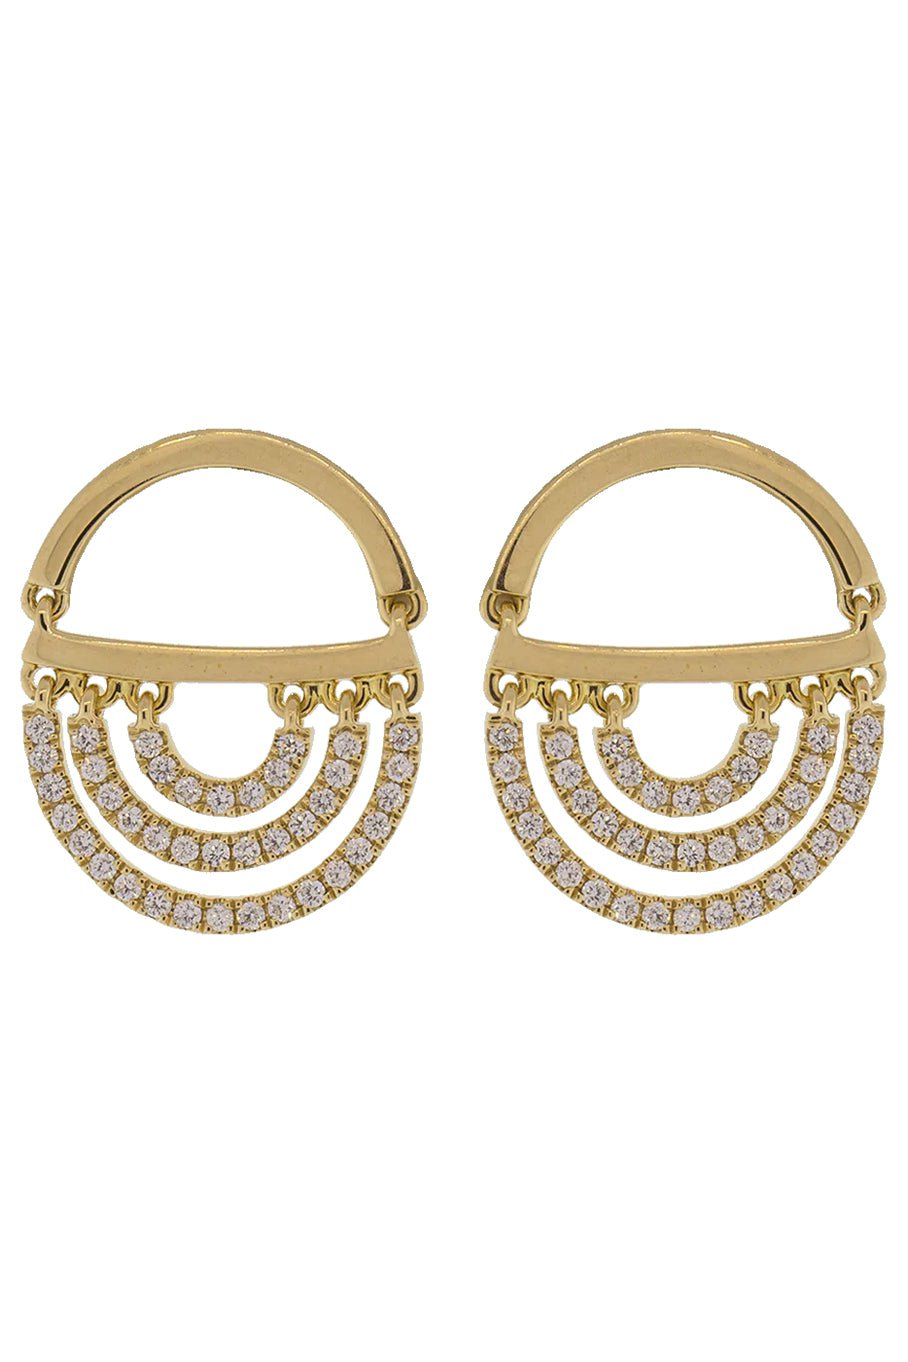 CADAR-Twin Drop Earrings-YELLOW GOLD